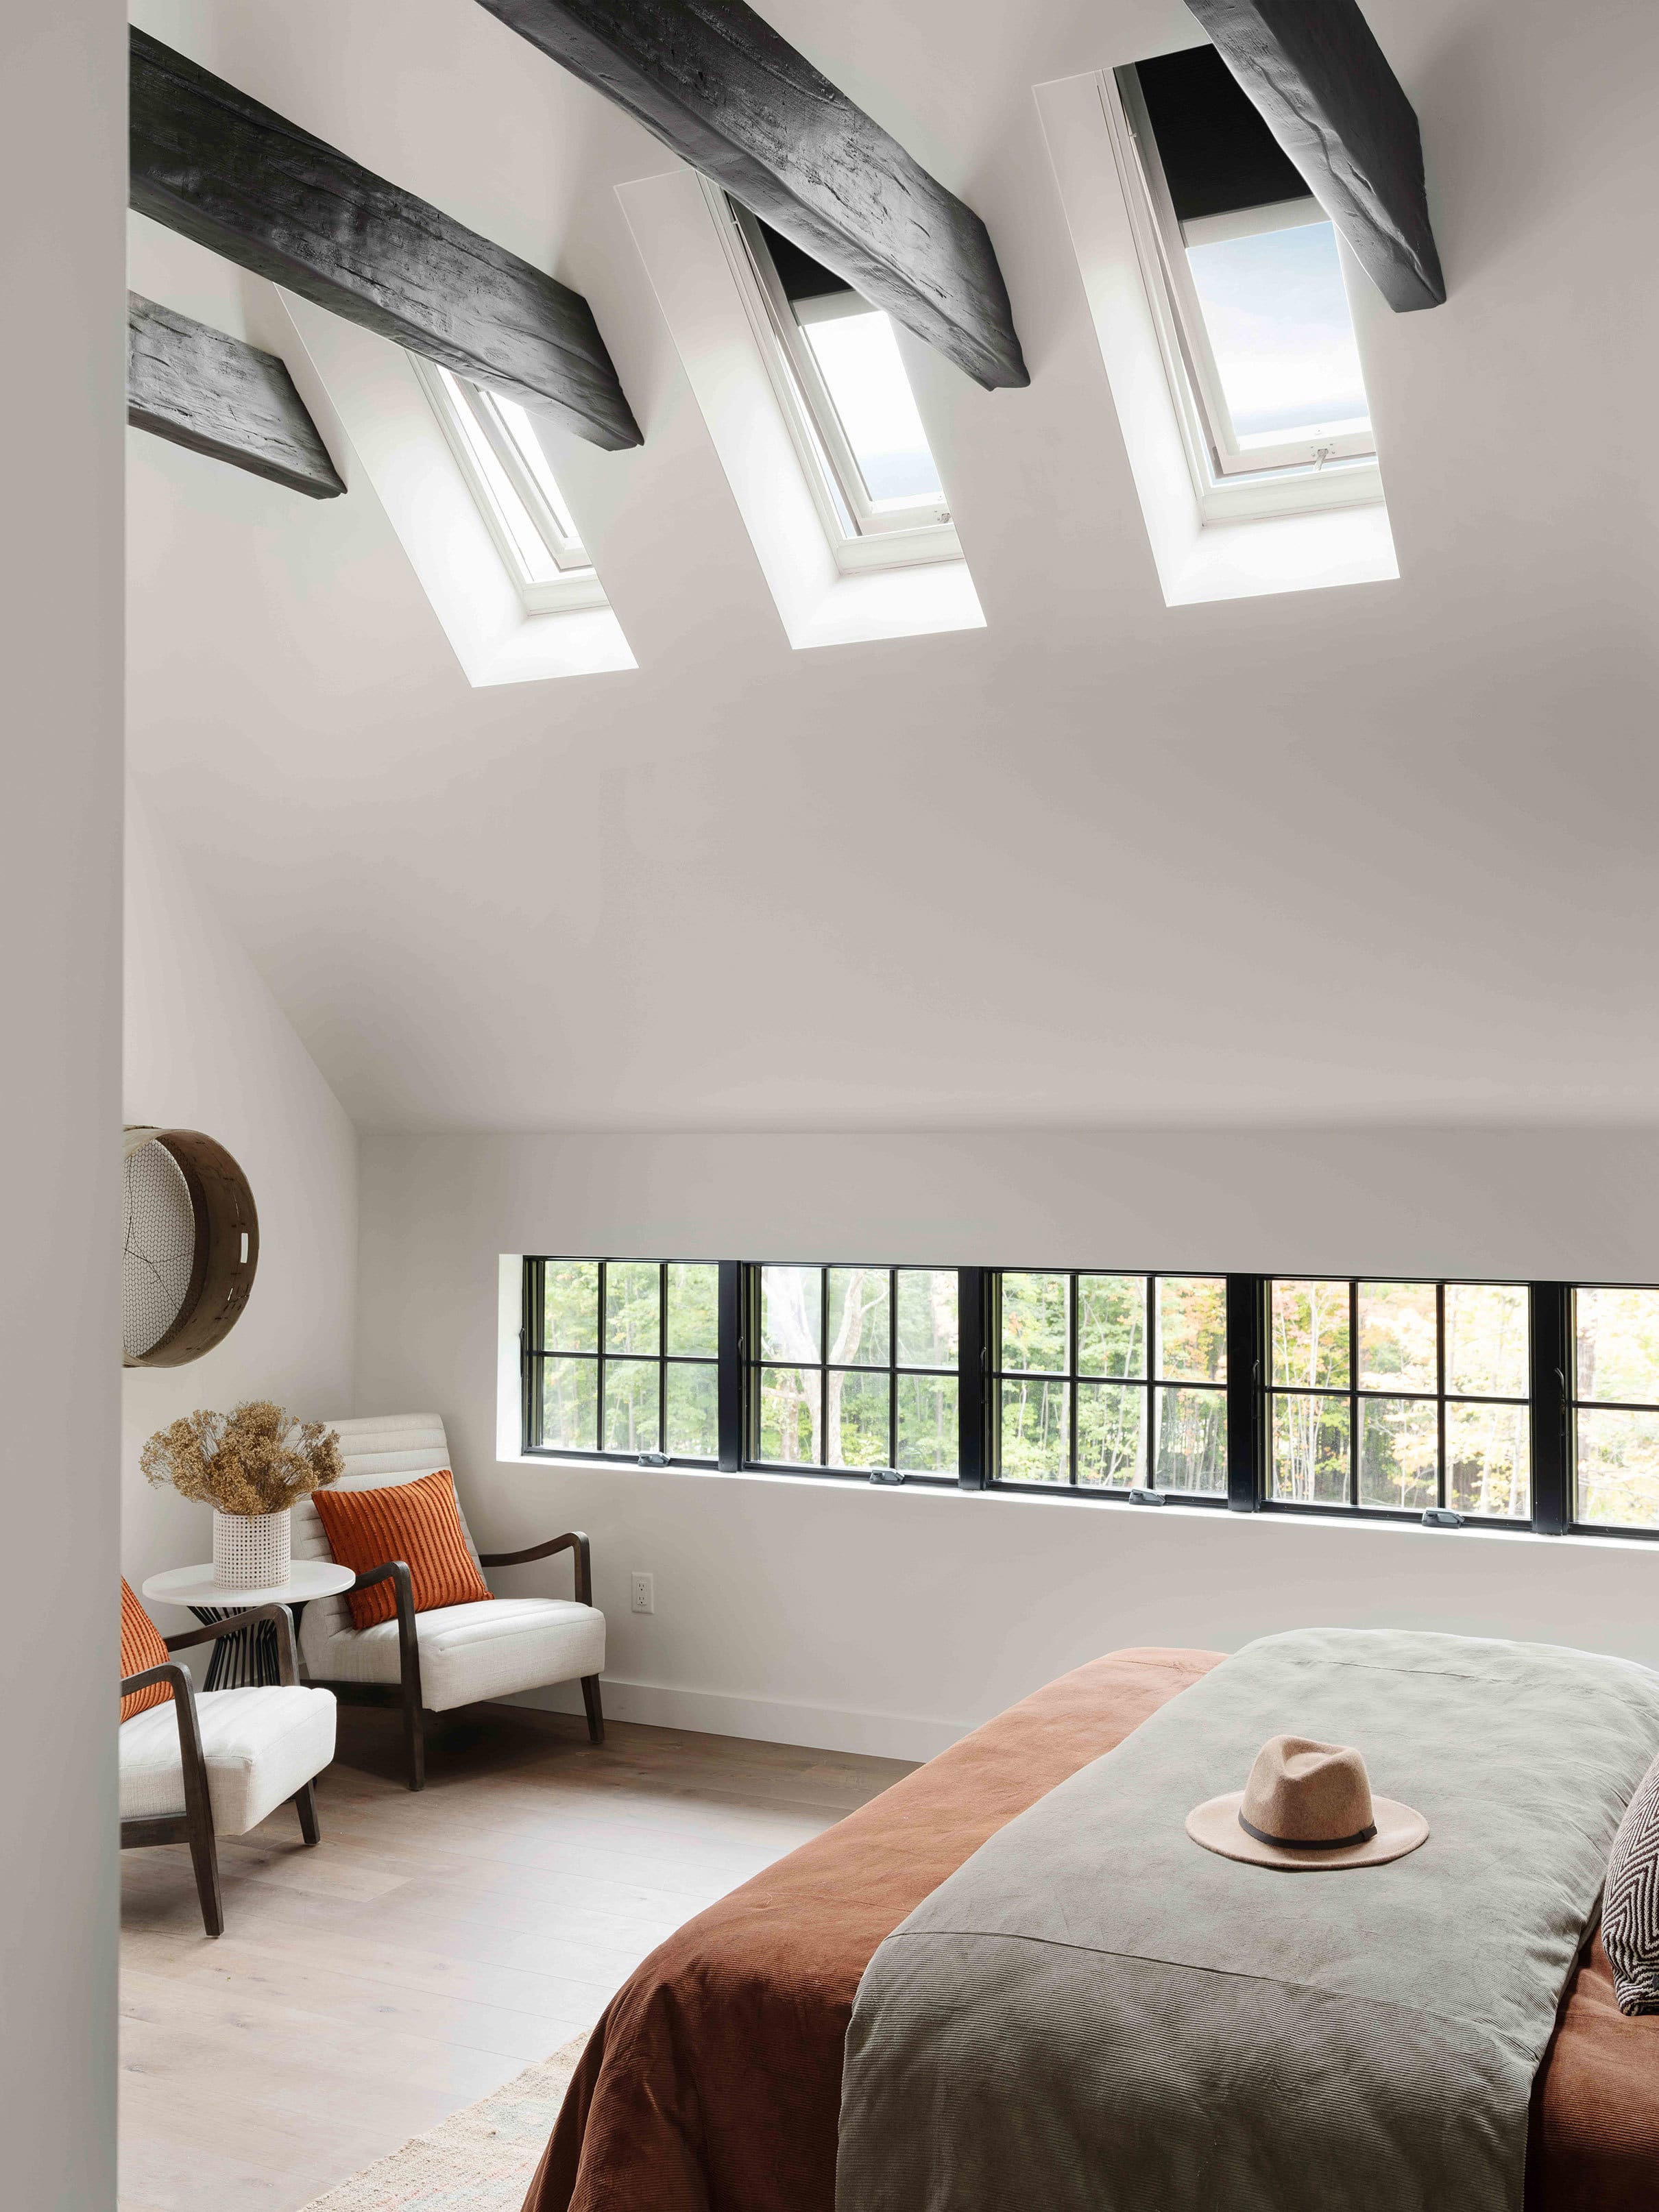 Bedroom skylights white walls timber beams